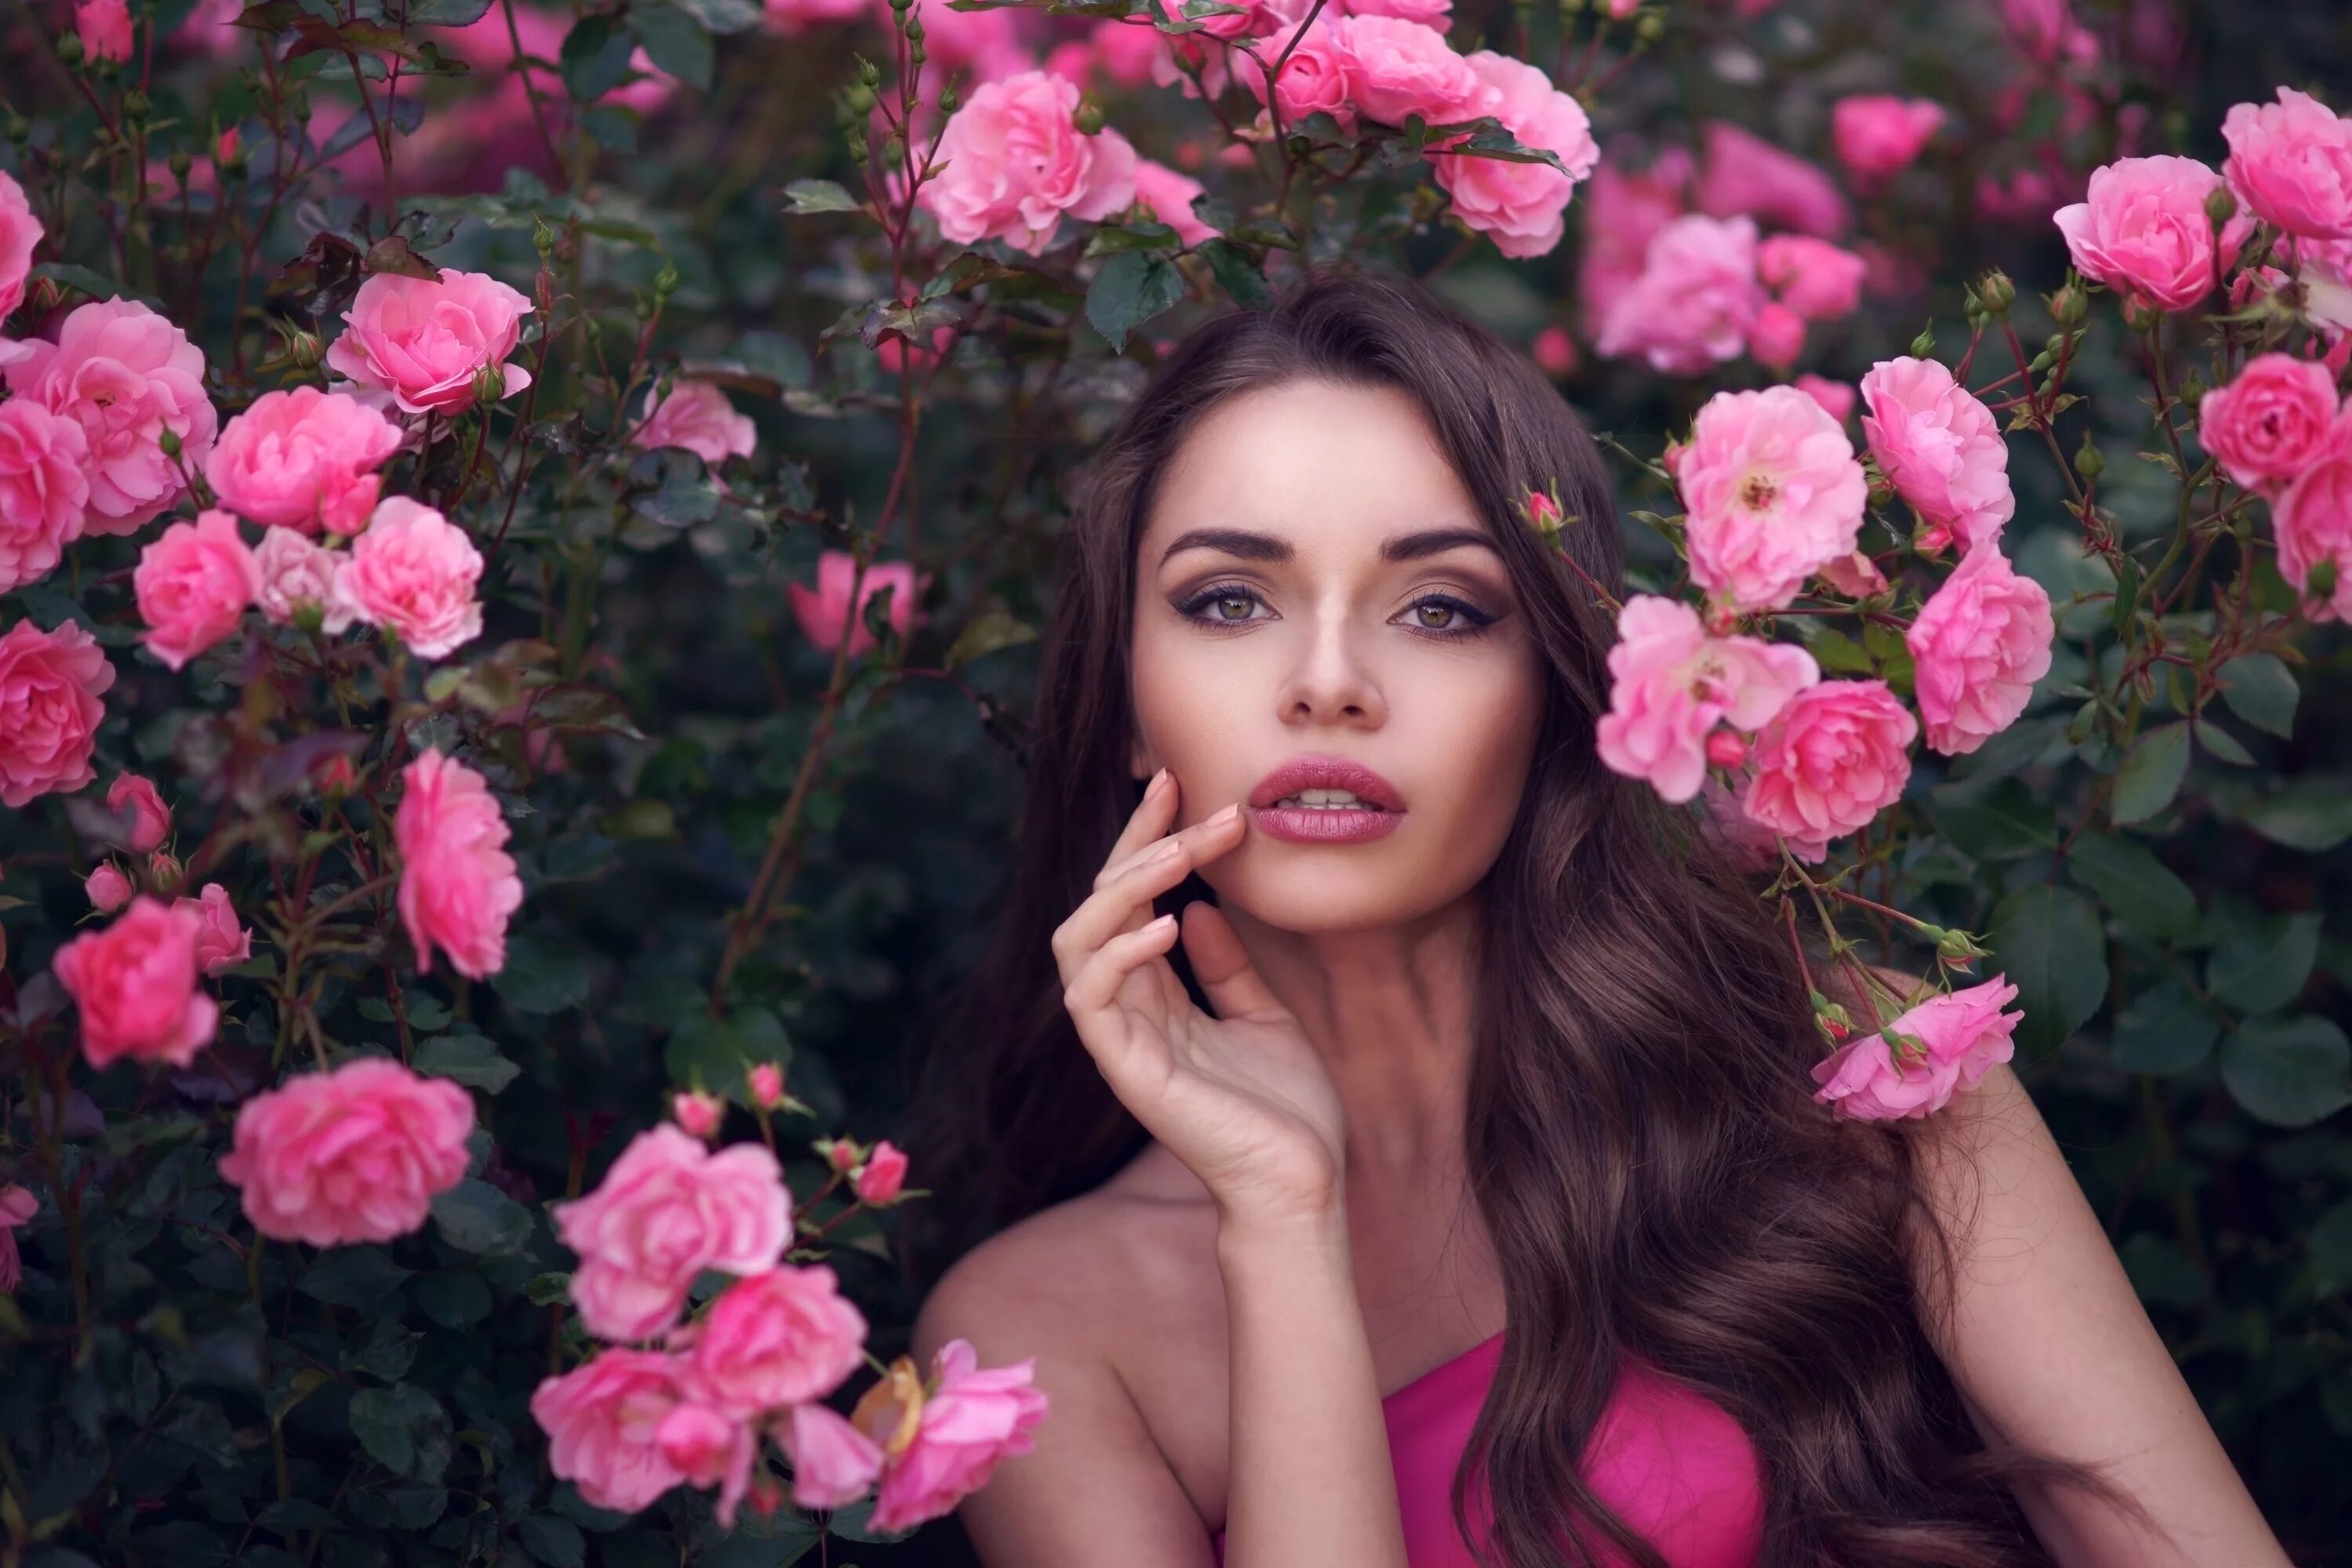 Девушка с розой. Девушка в цветах. Девушка с розовыми розами. Брюнетка в цветах. Charming woman